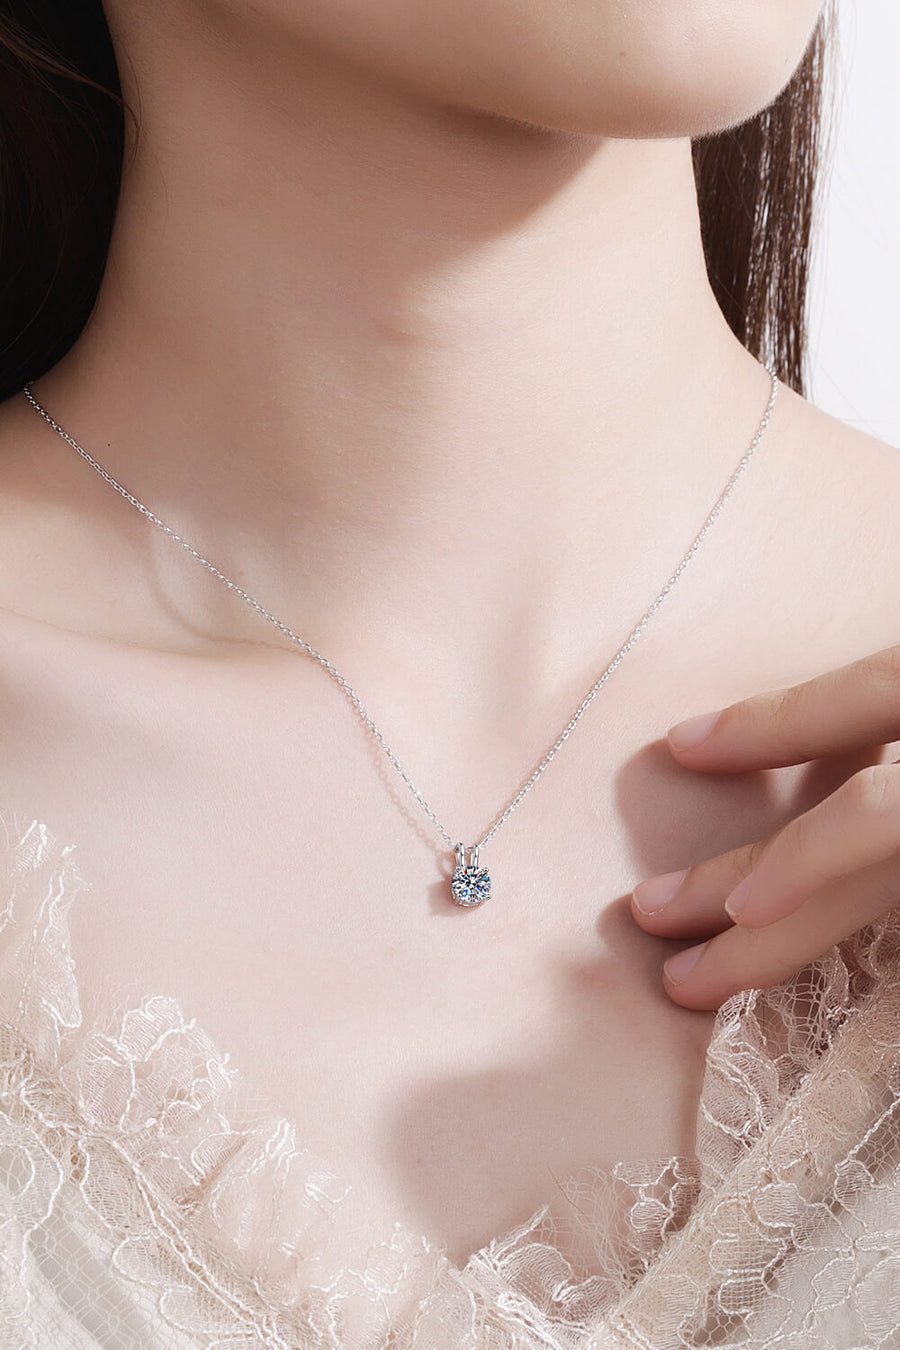 Best Diamond Necklace Jewelry Gifts for Women | 0.8 Carat Diamond Round Pendant Necklace  | MASON New York